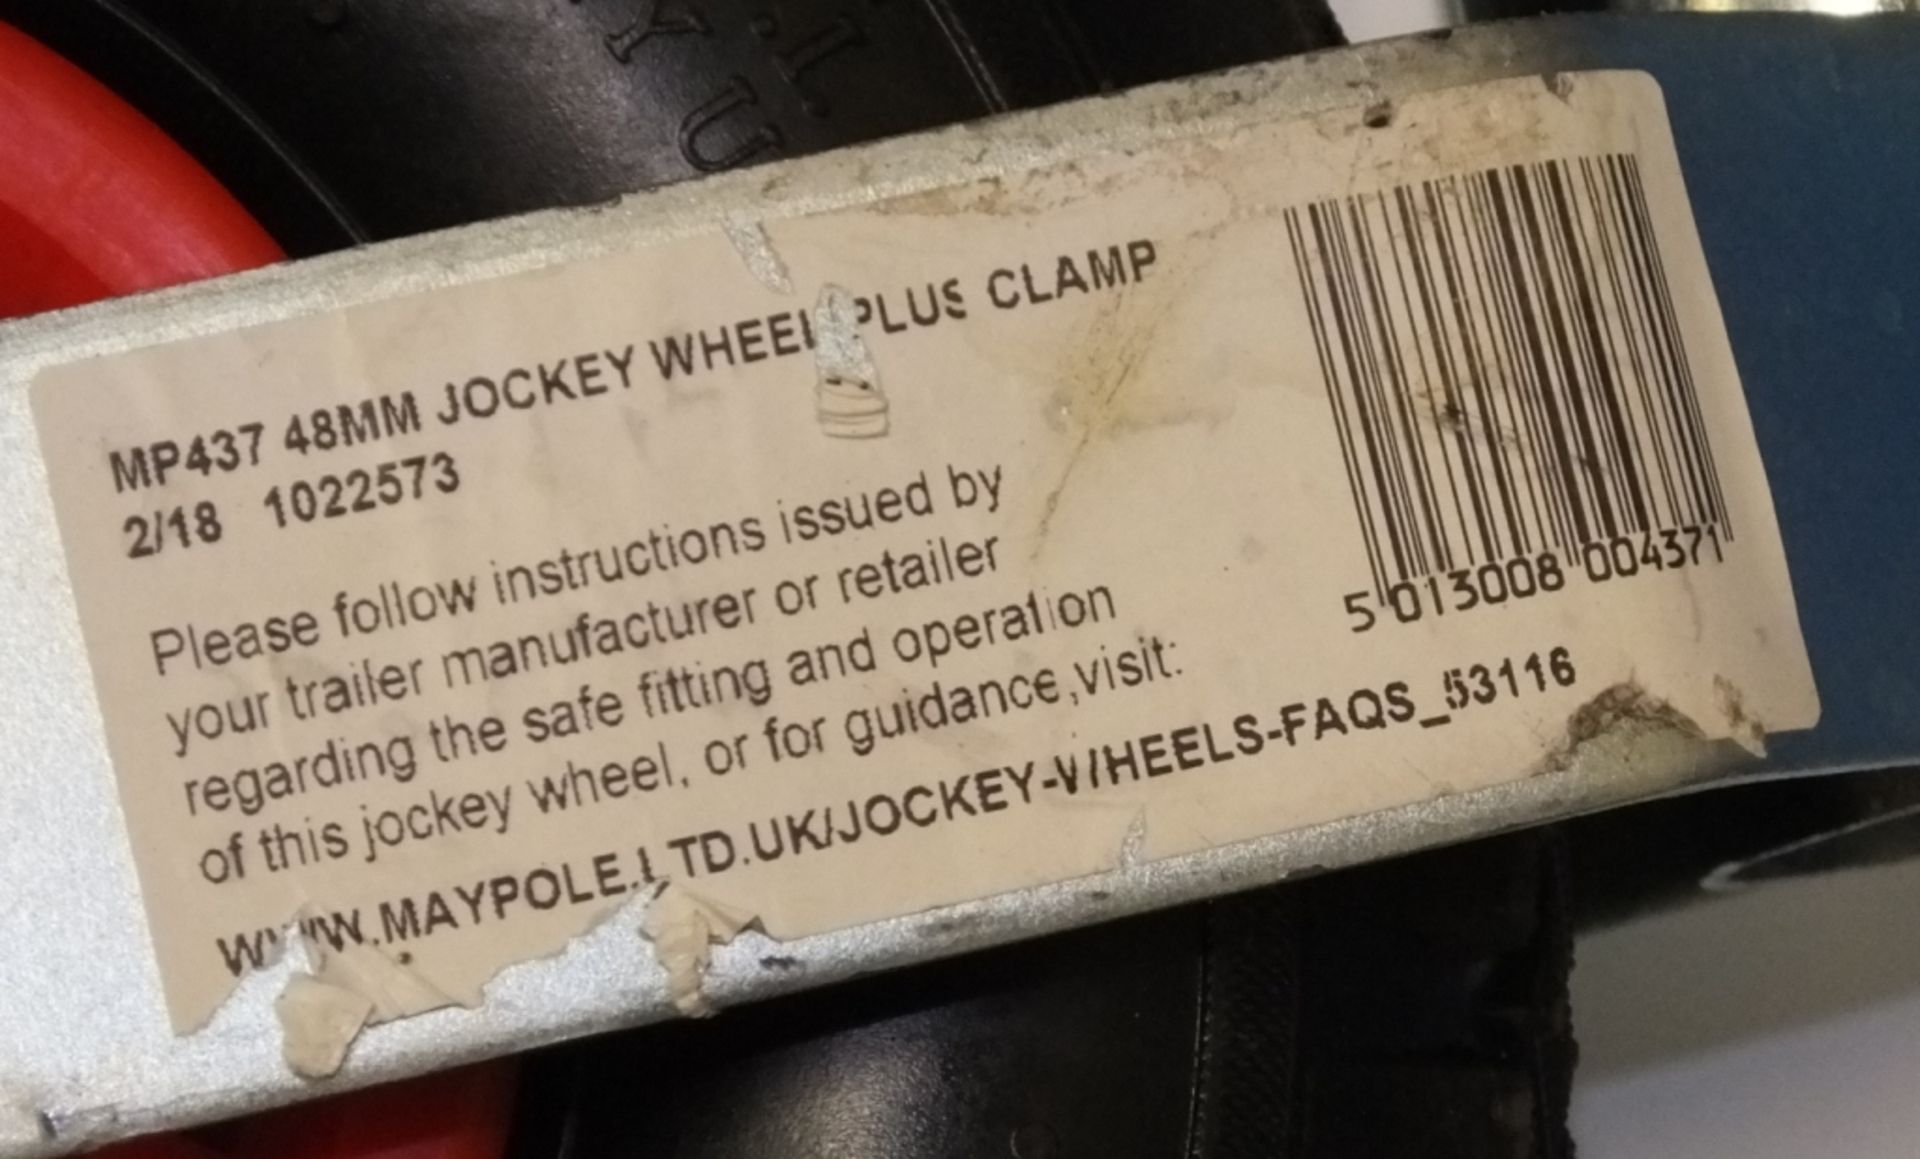 Maypole MP437 48mm Jockey wheel plus clamp - Image 3 of 3